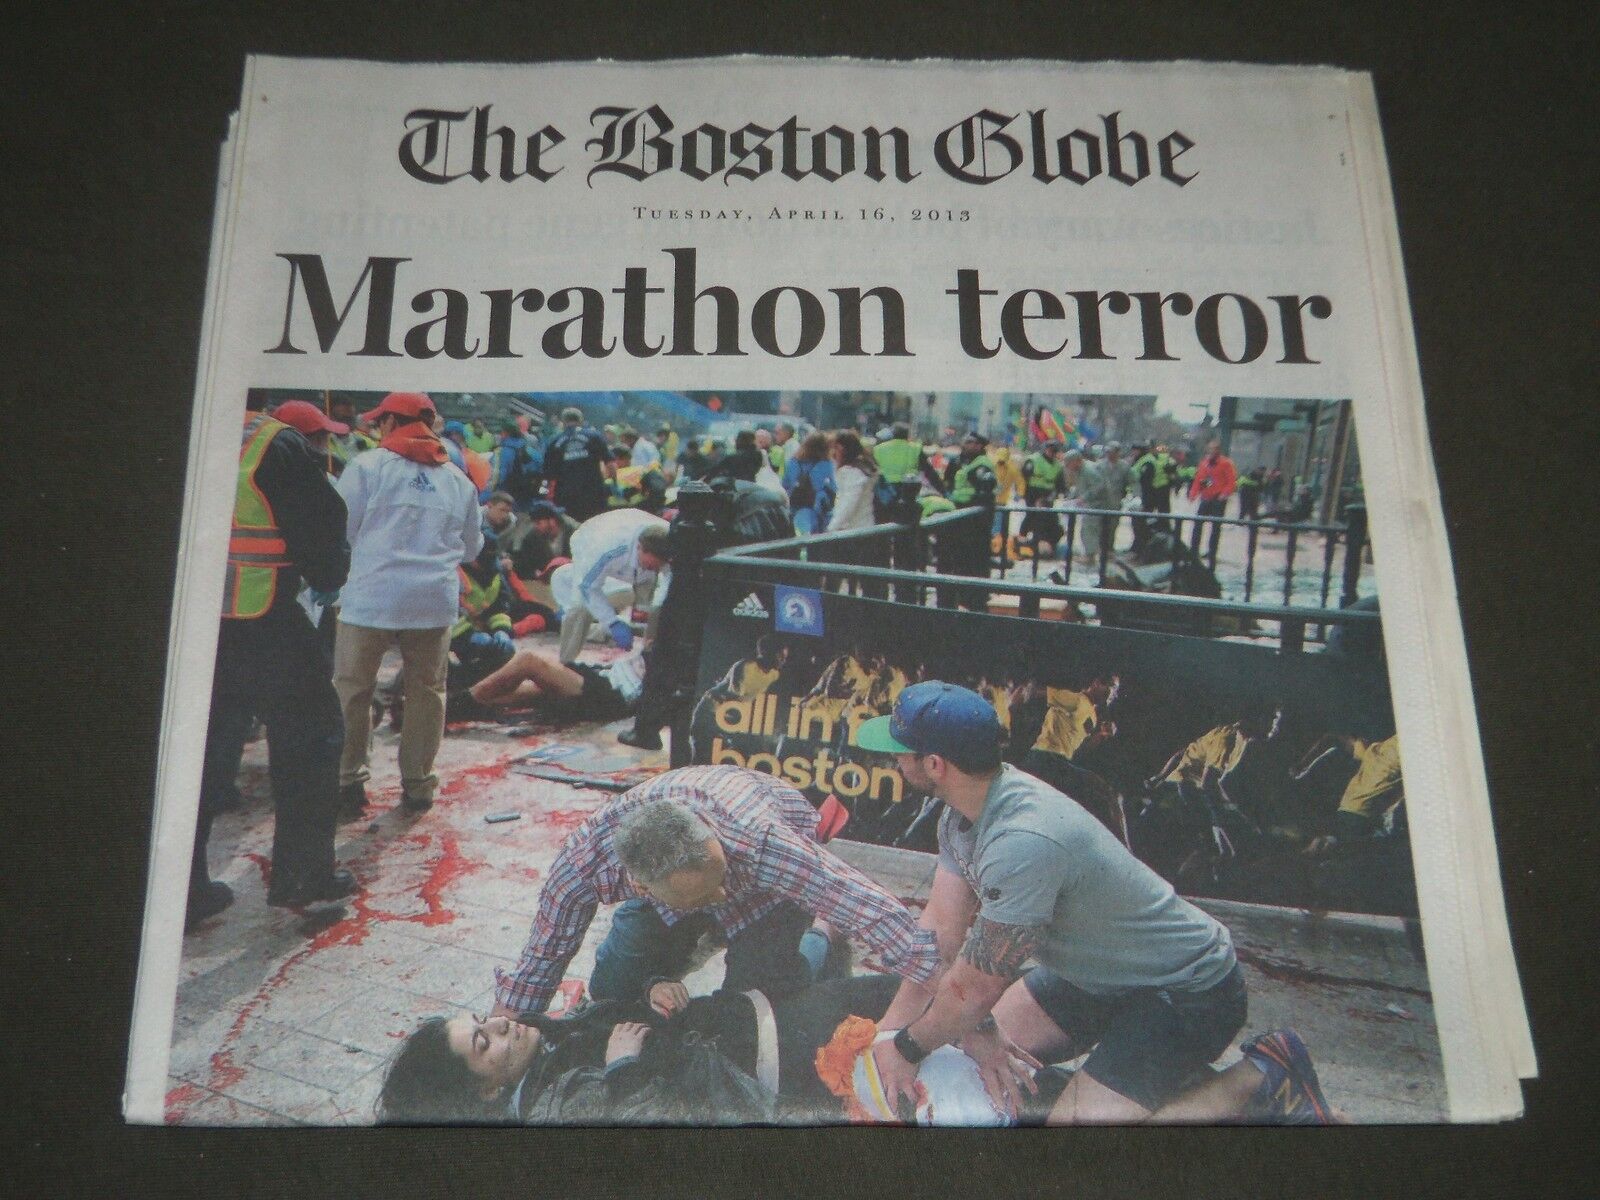 2013 APRIL 16 THE BOSTON GLOBE NEWSPAPER - BOSTON MARATHON TERROR - NP 2555